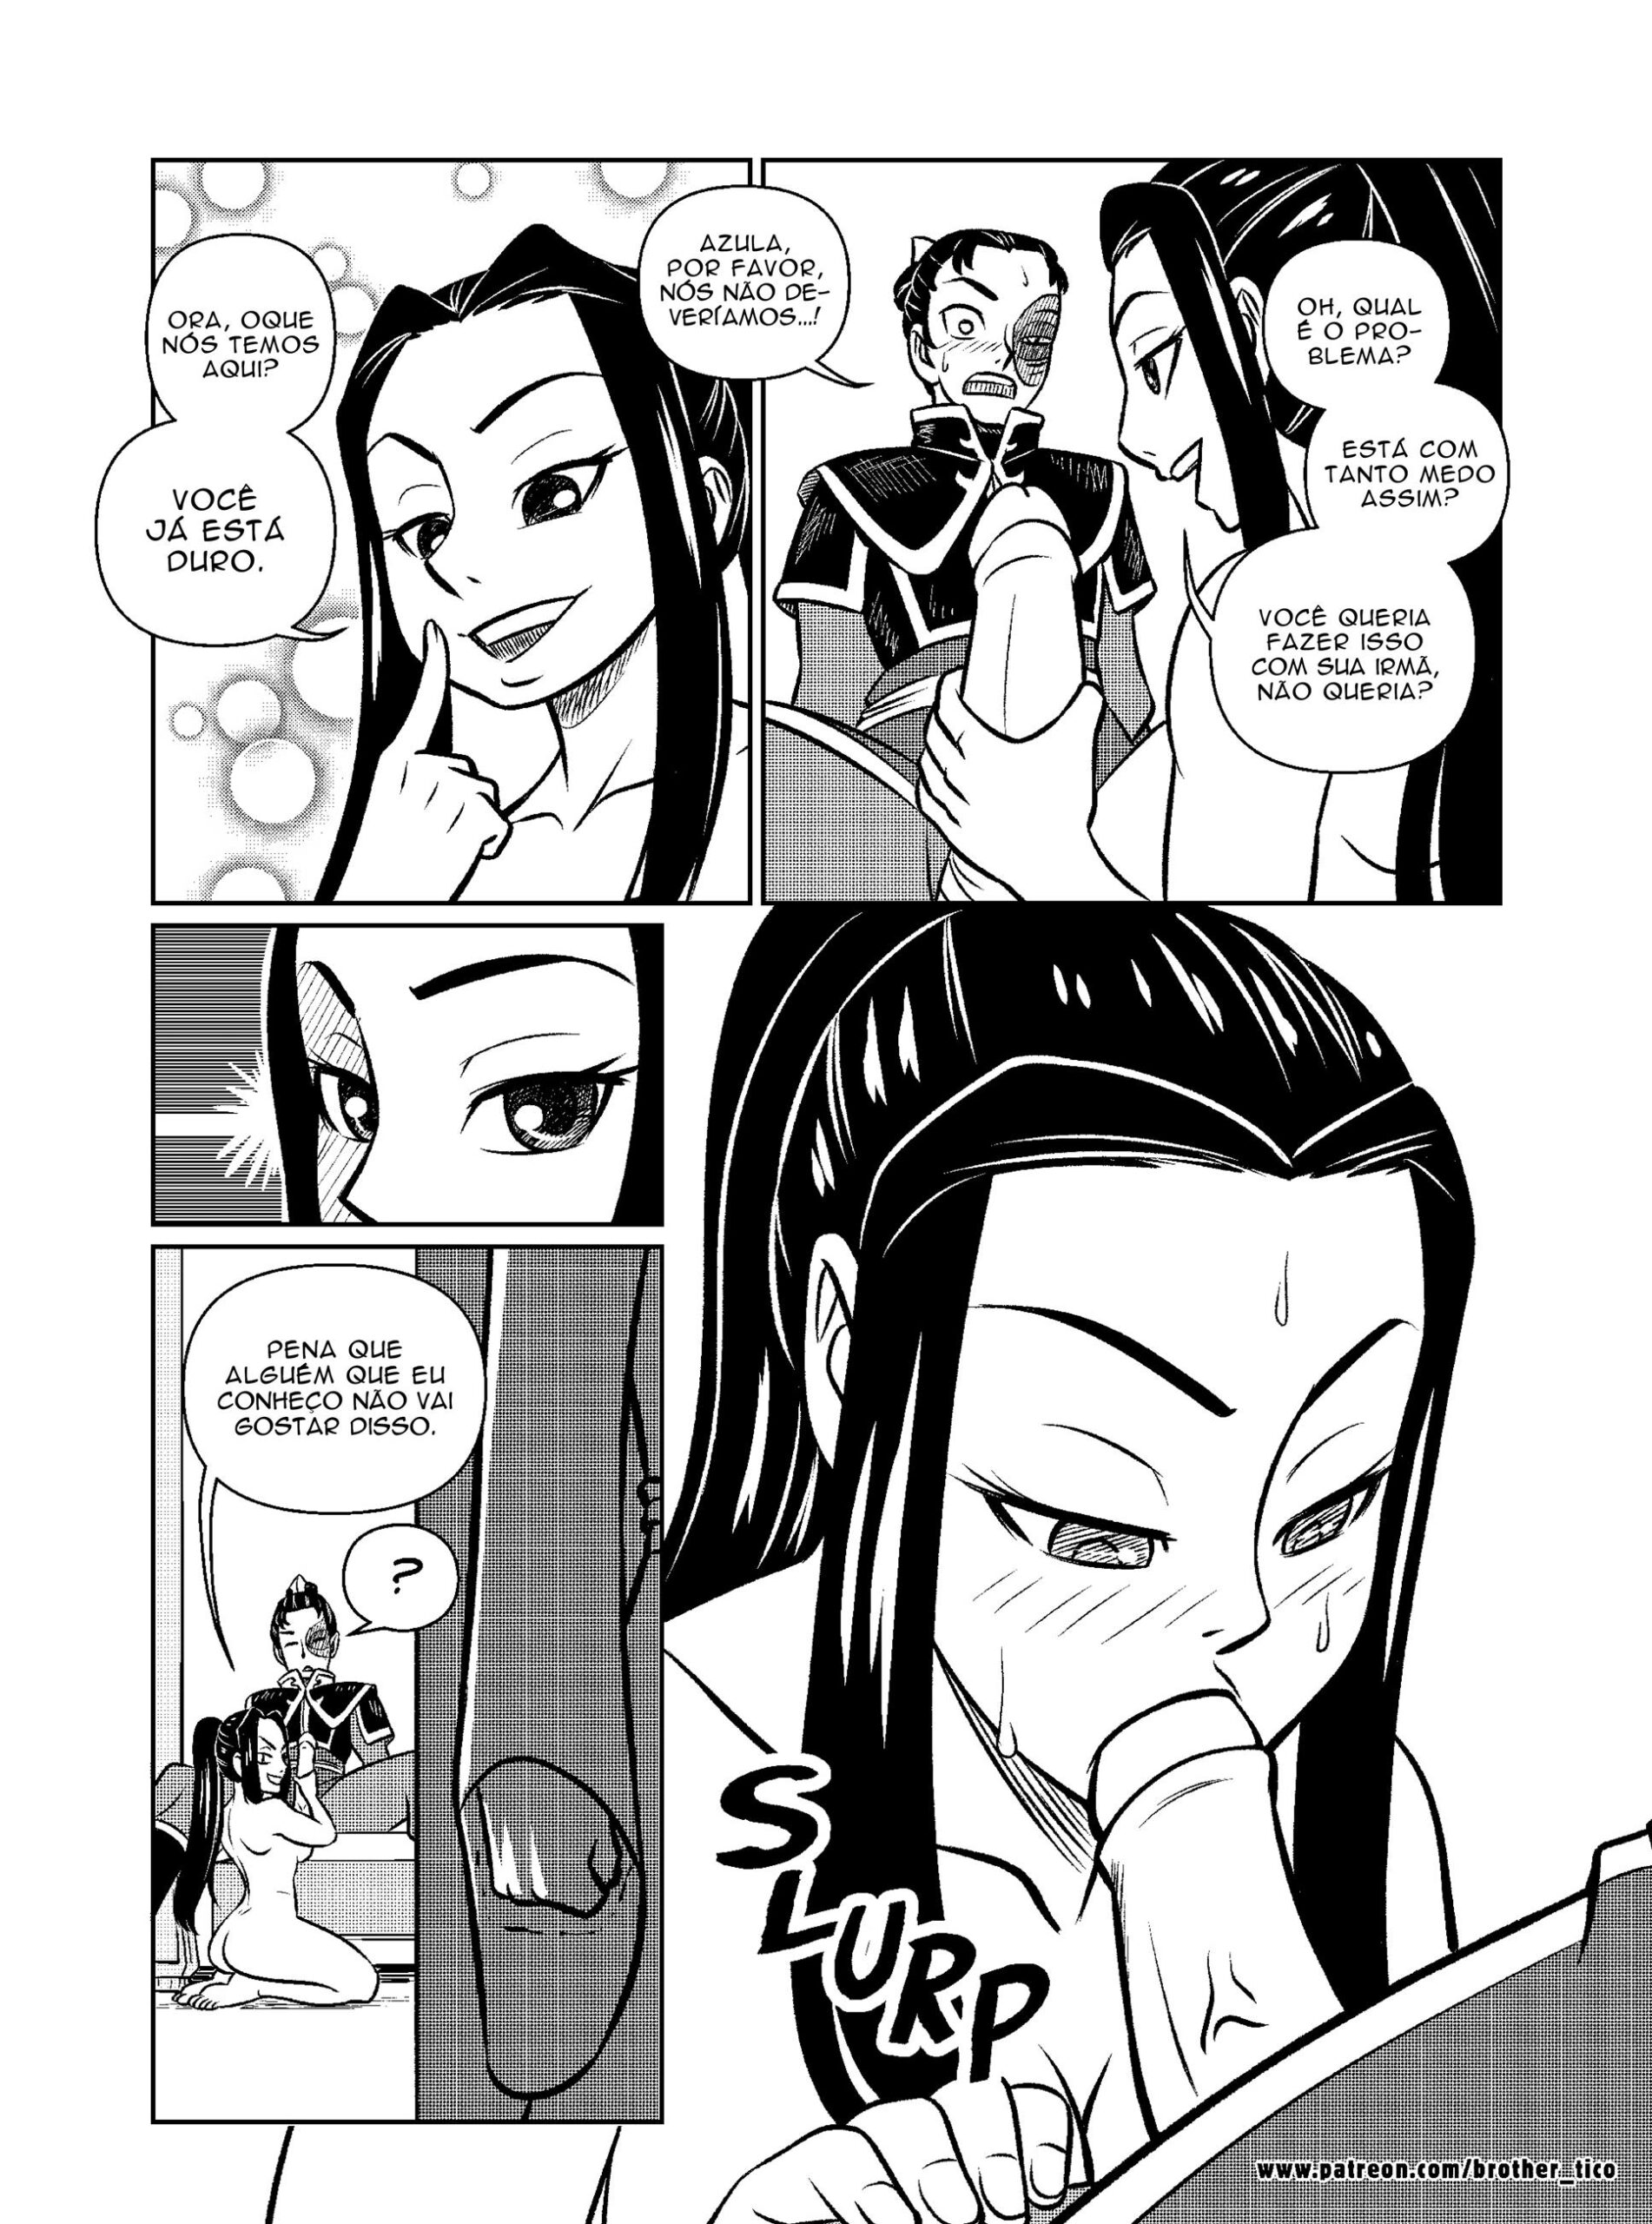 Avatar Incesto: Zuko ganha sexo da irmã